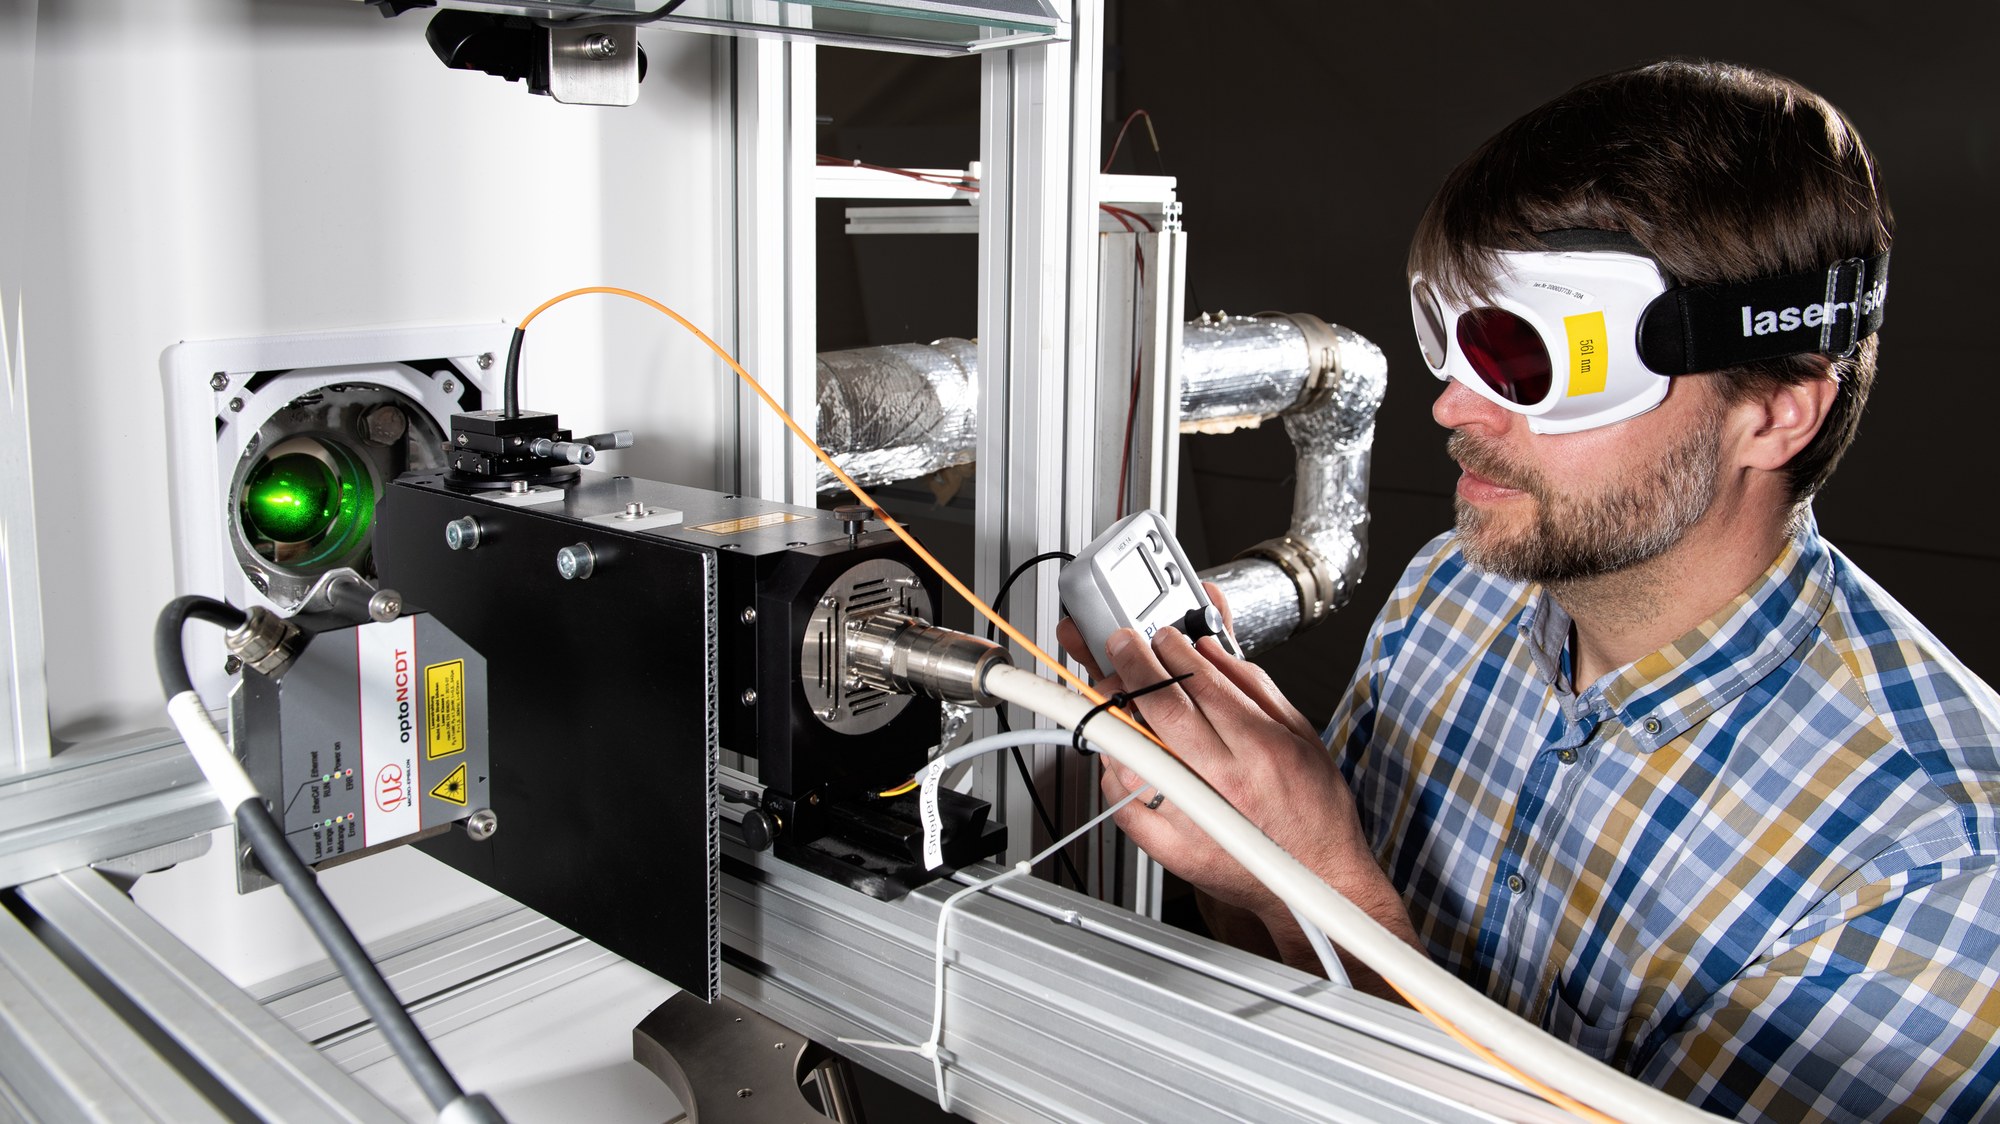 A scientist wearing safety goggles works on an experimental setup for Laser Doppler Velocimetry (LDV).